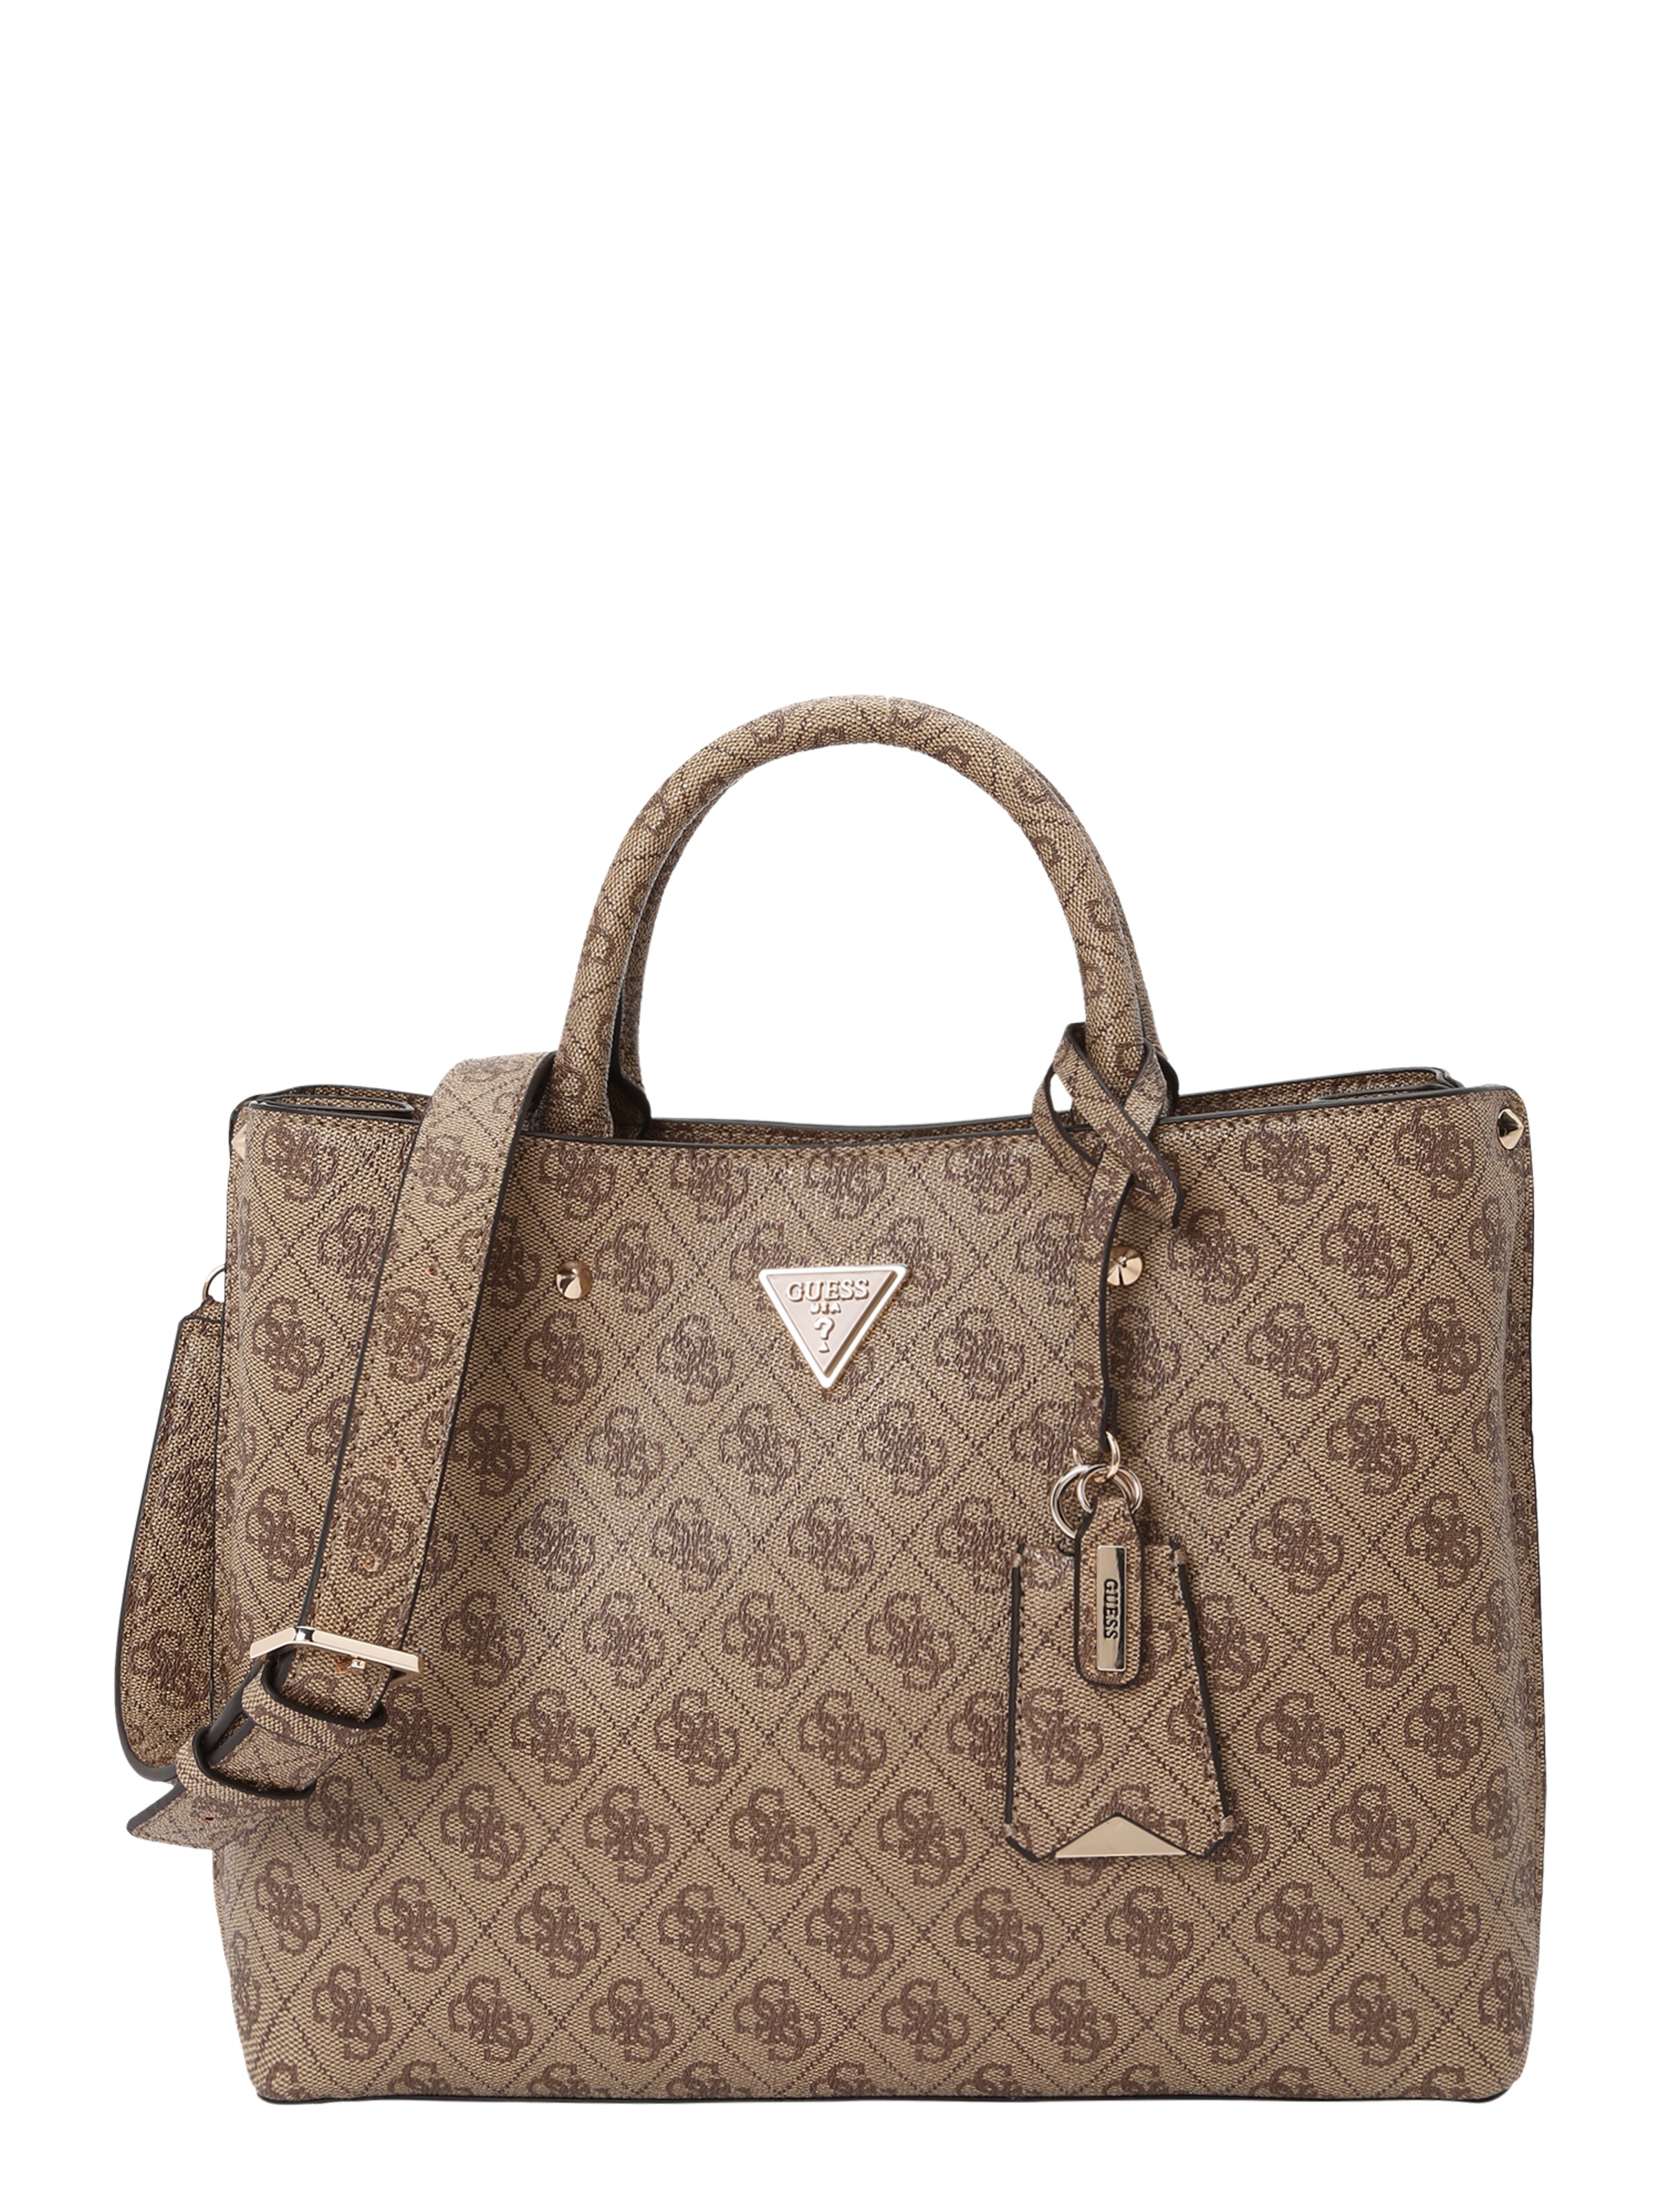 Purses And Handbags For Women Shoulder Bag Tote Purse Messenger Satchel For  Ladies (Maroon) - Walmart.com